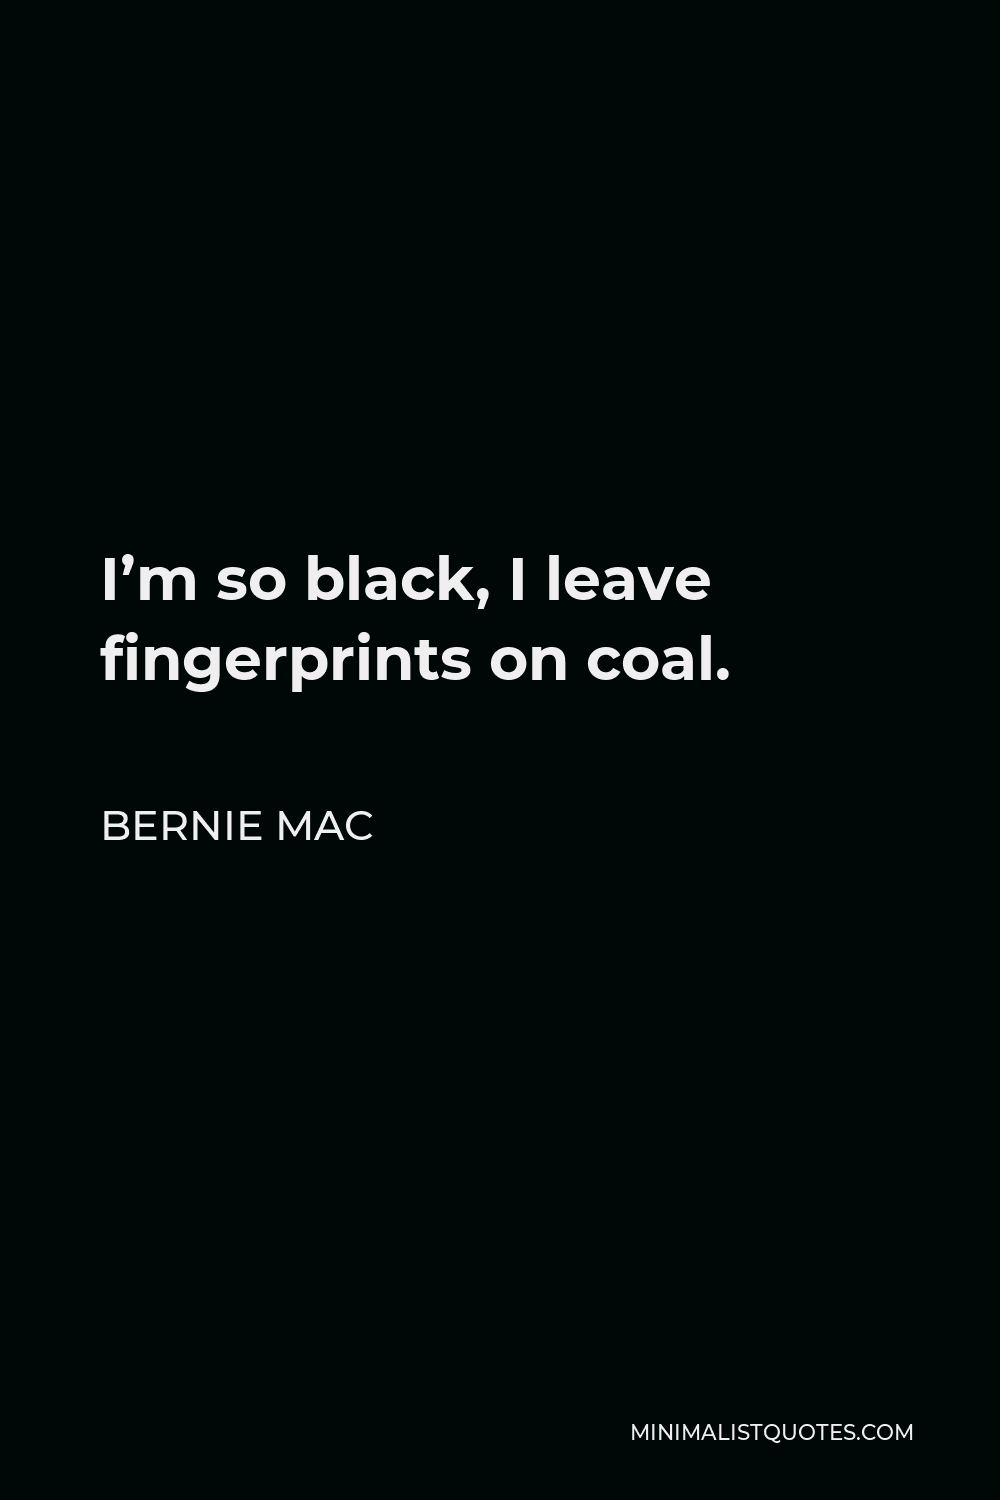 Bernie Mac Quote - I’m so black, I leave fingerprints on coal.